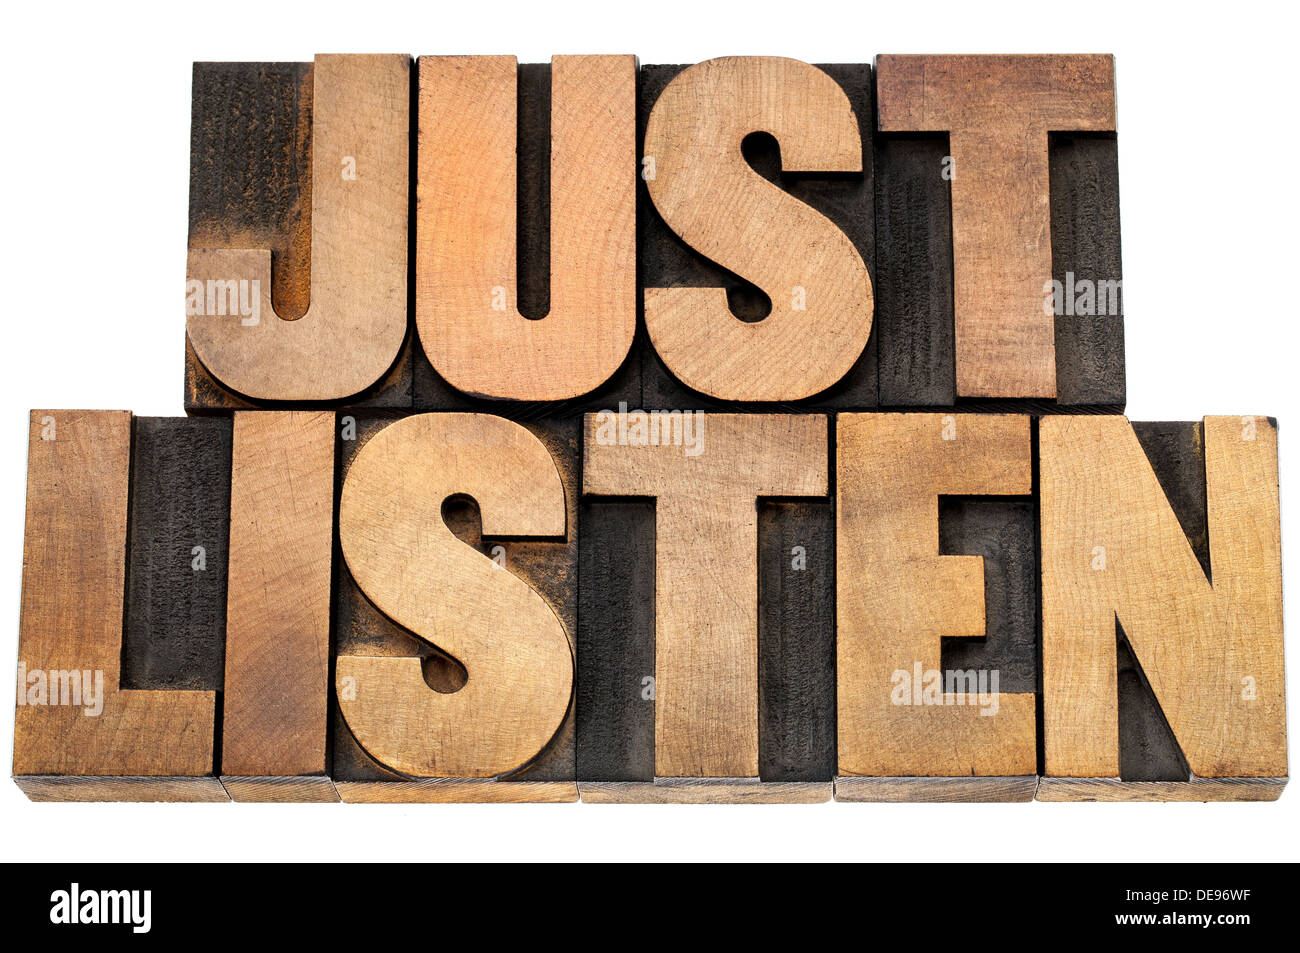 just listen advice - isolated text in letterpress wood type blocks Stock Photo